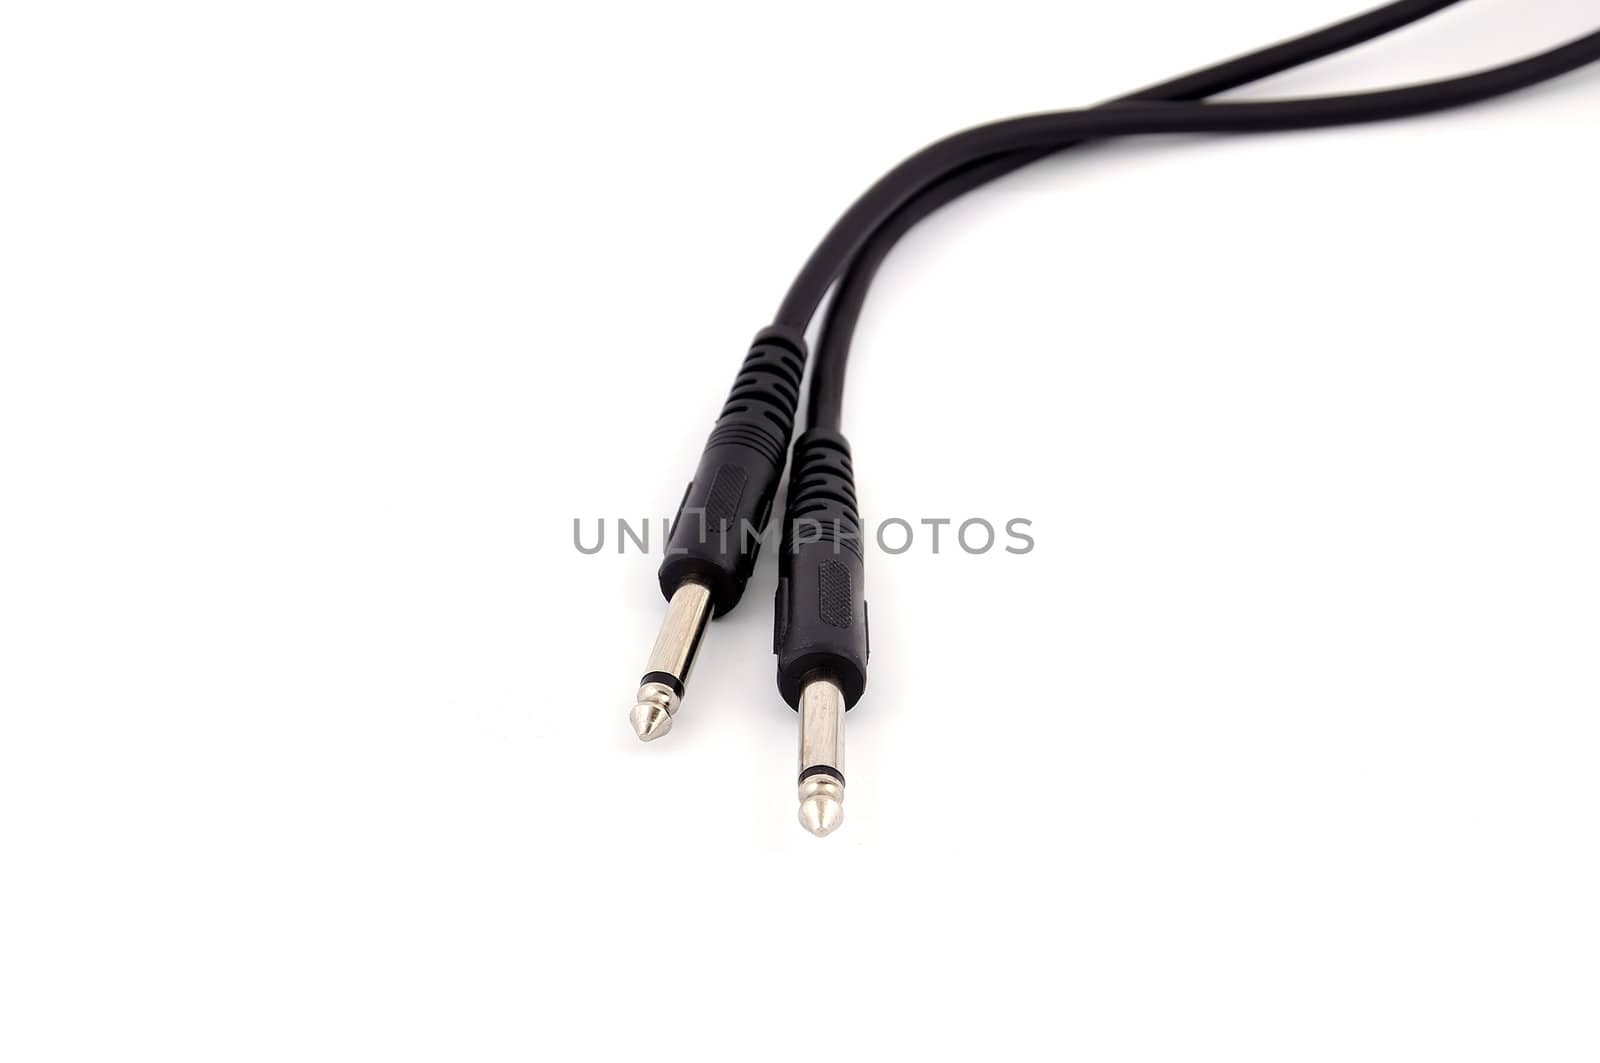 Two black audio plug on a white background